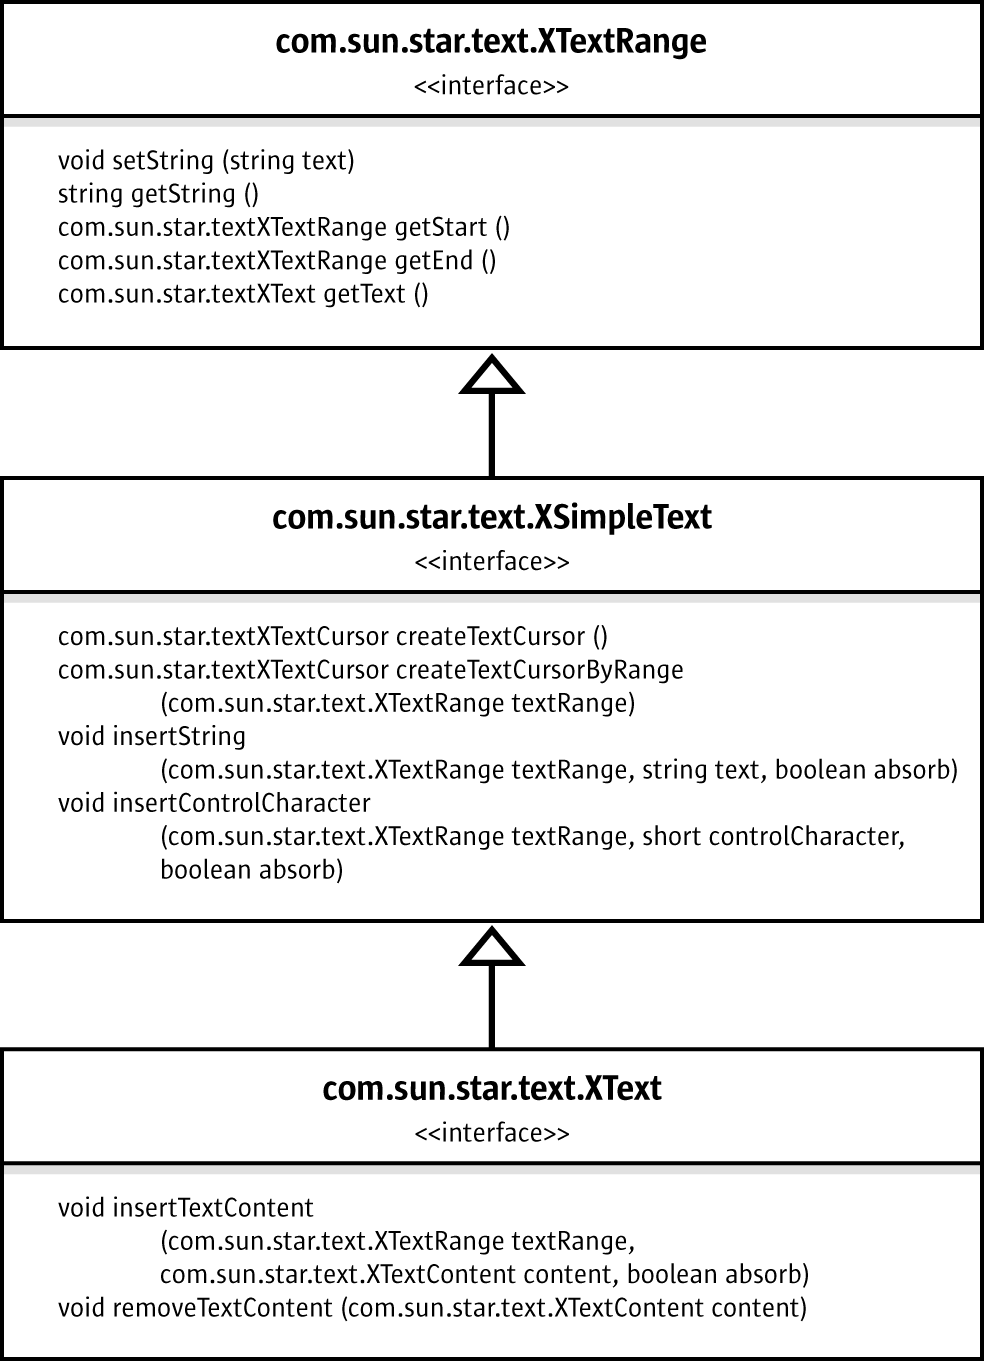 UML diagram showing the com.sun.star.XTextRange interface